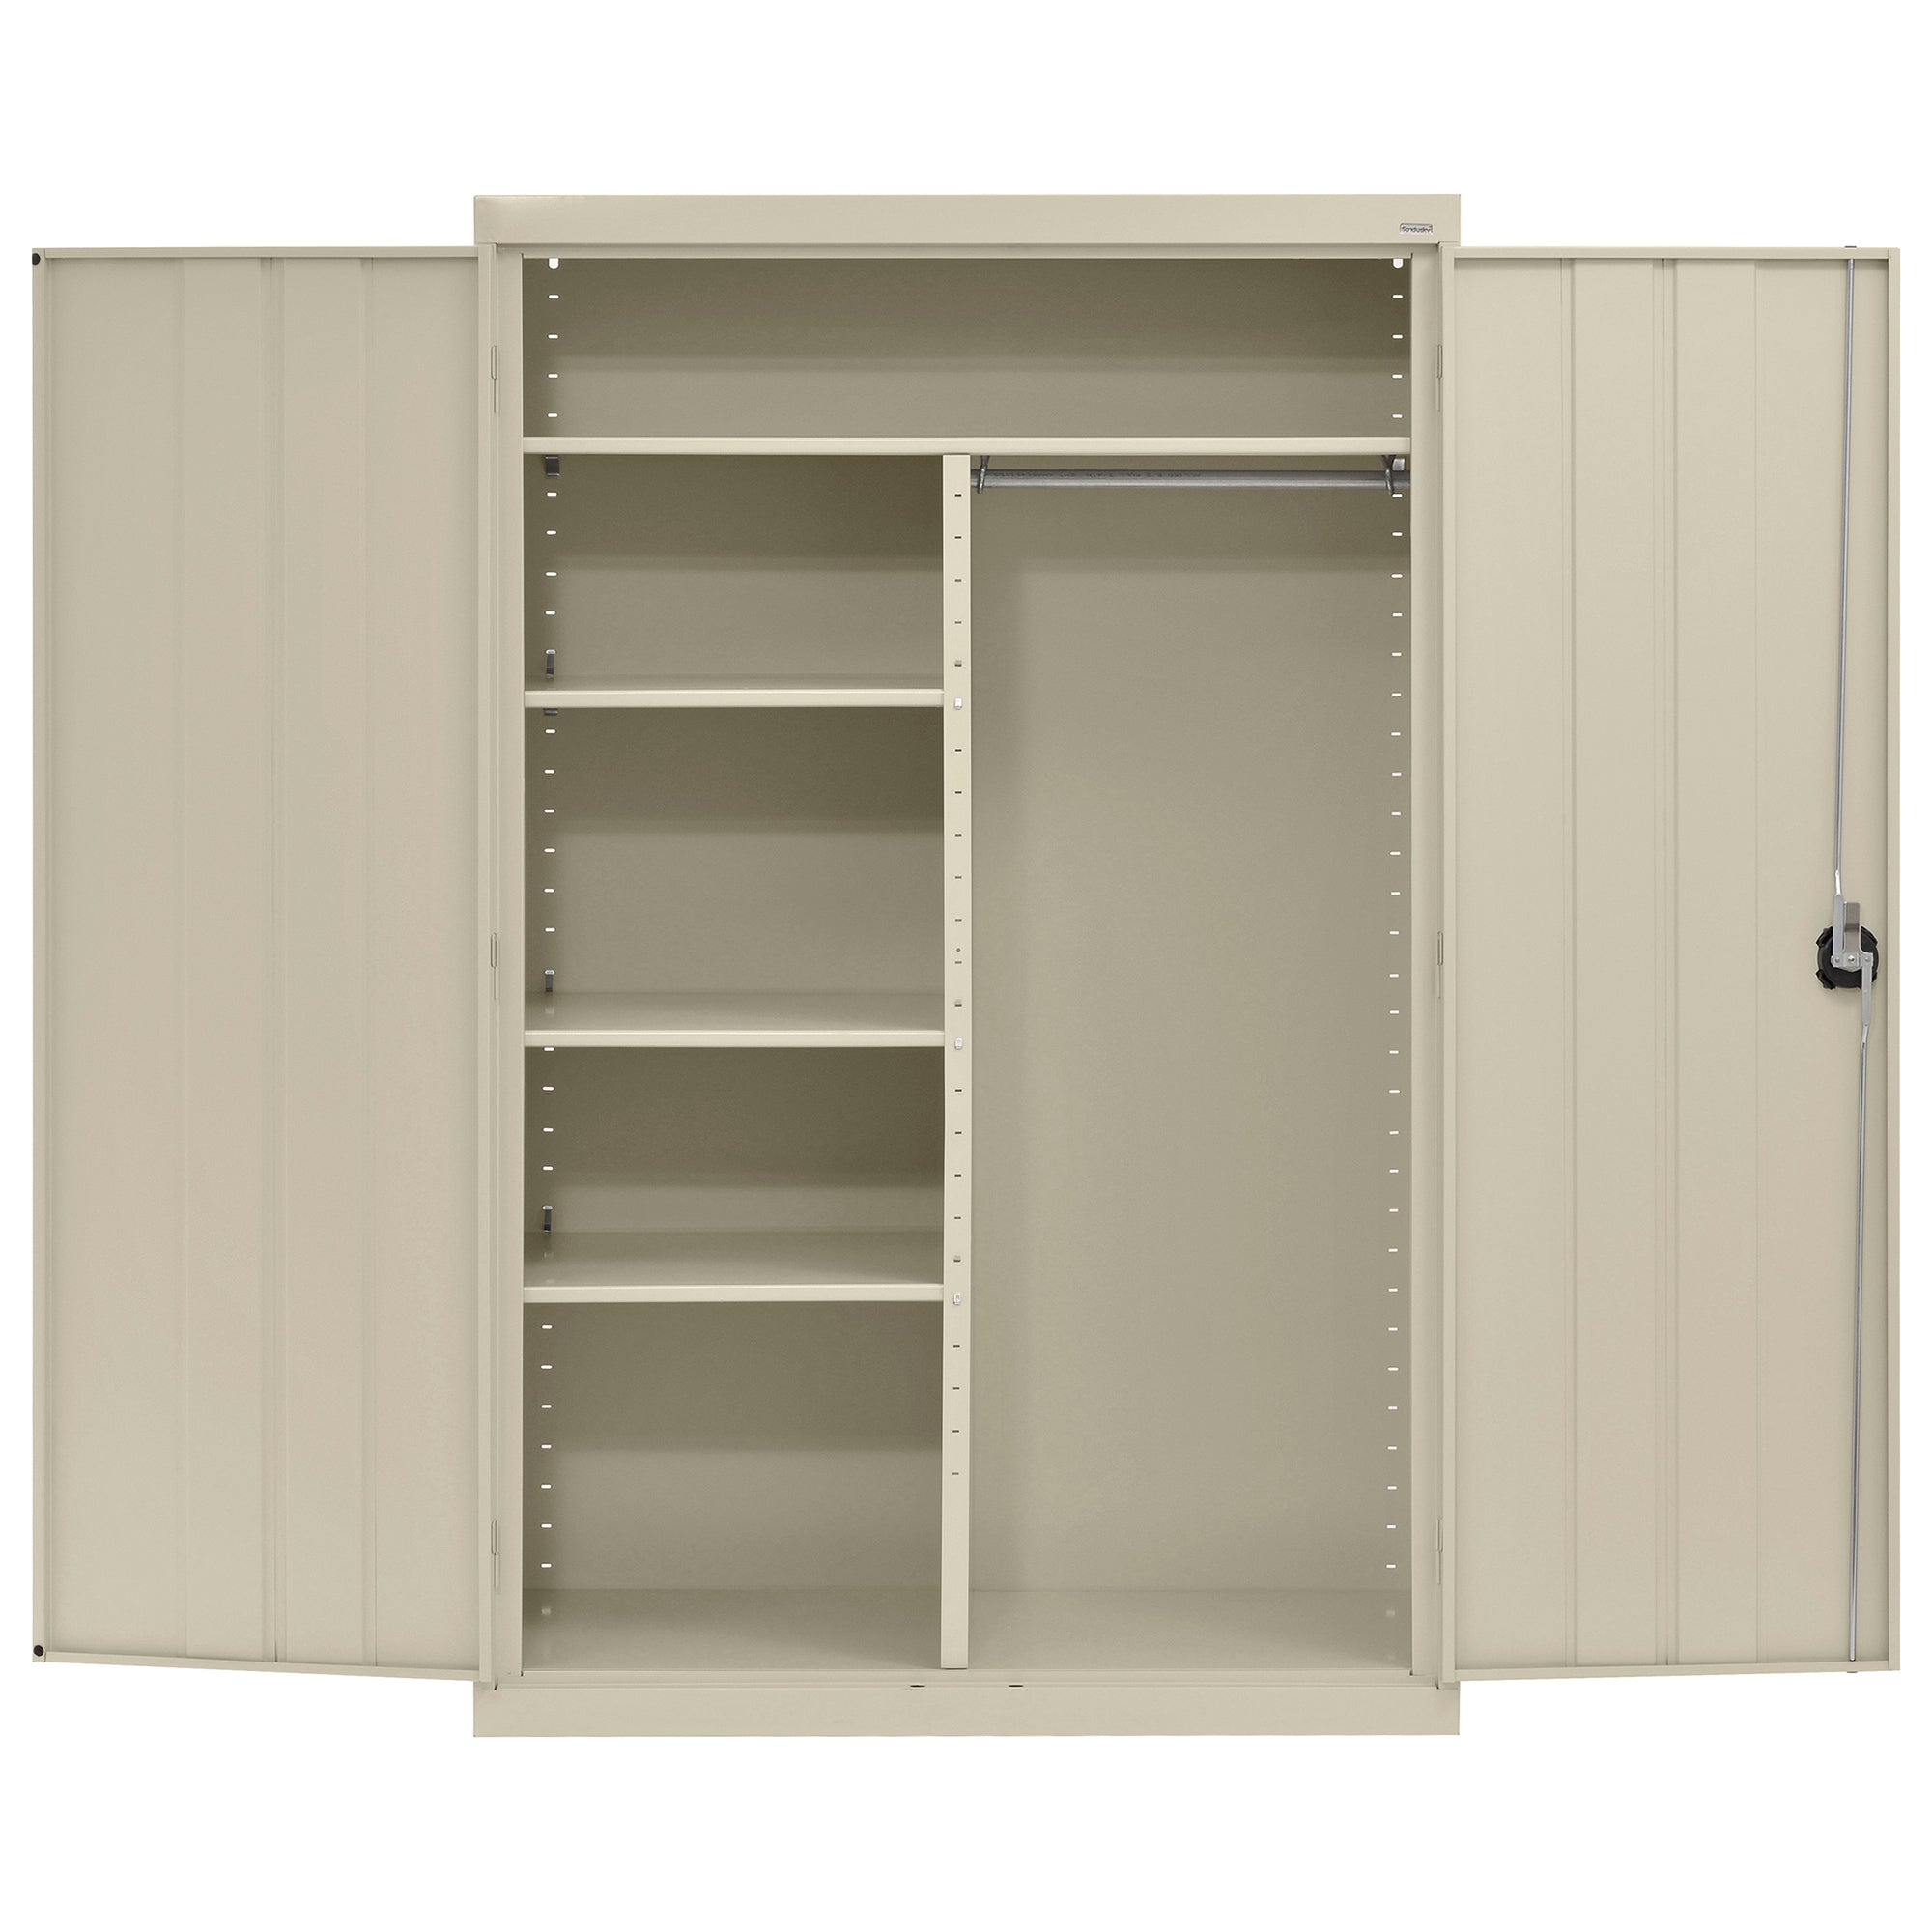 Elite Series Jumbo Combination Storage Cabinet, 46" W x 24" D x 72" H